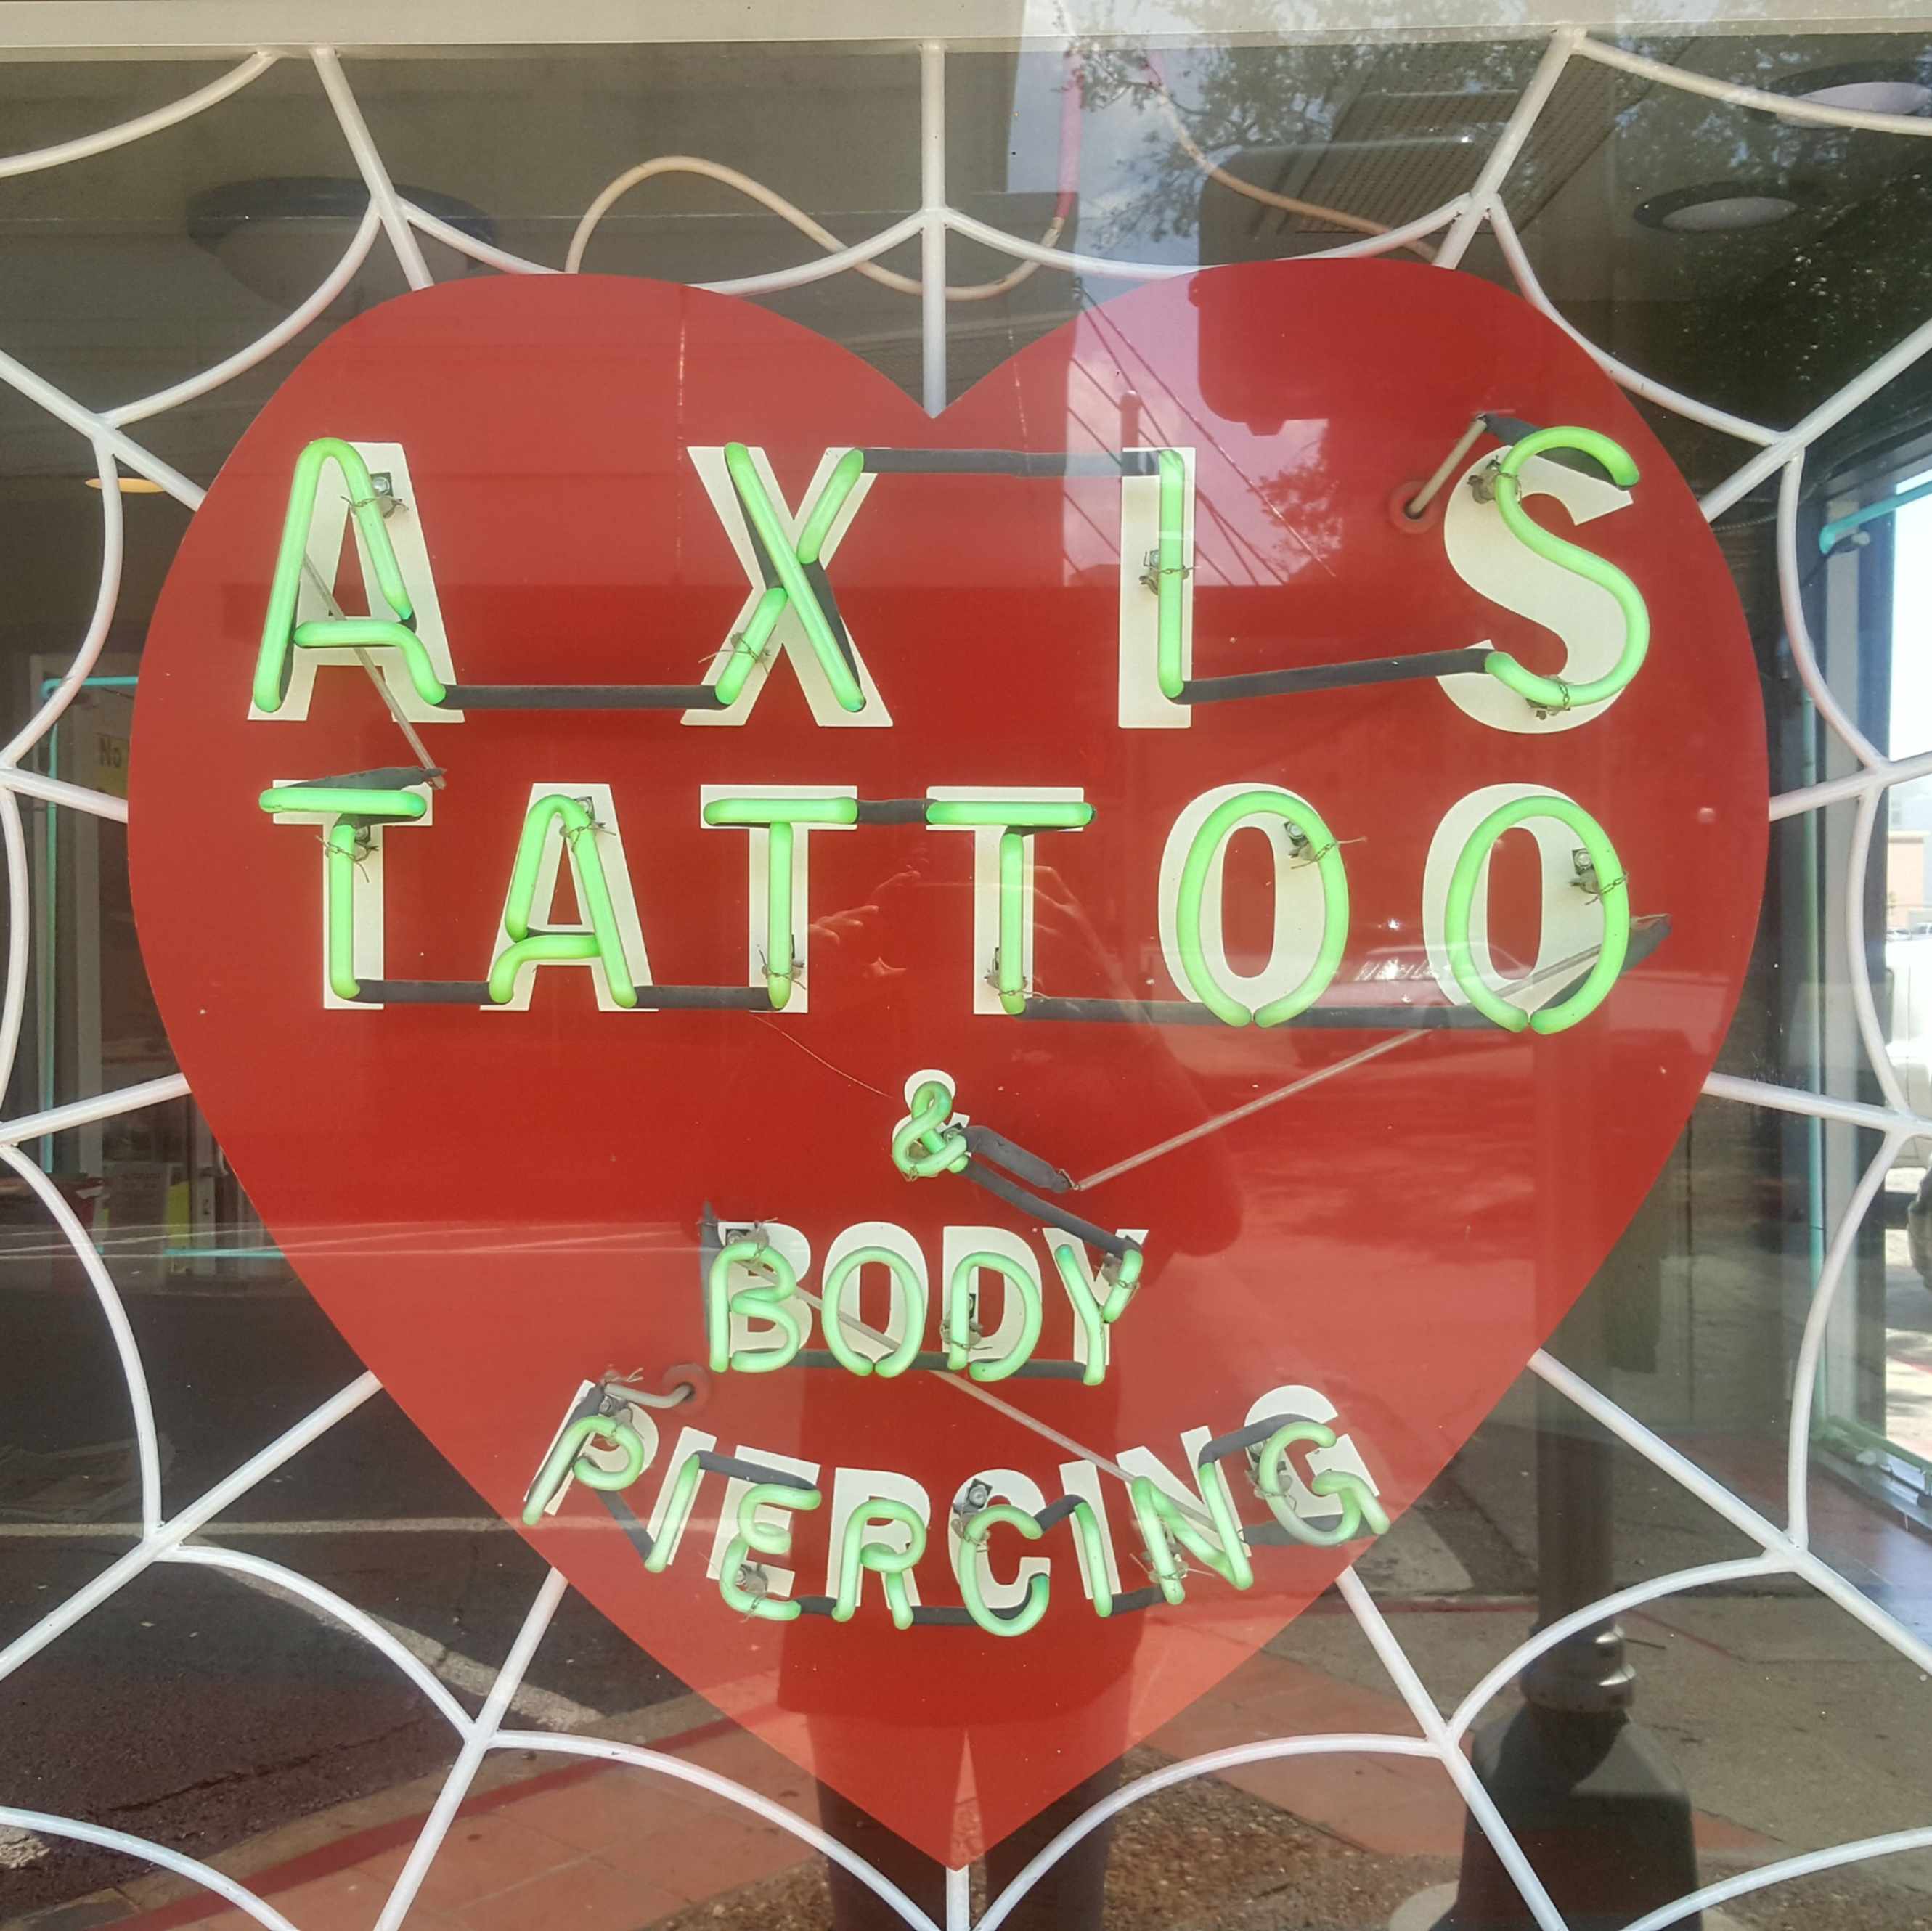 Axis Tattoo  Corpus Christi TX 78401